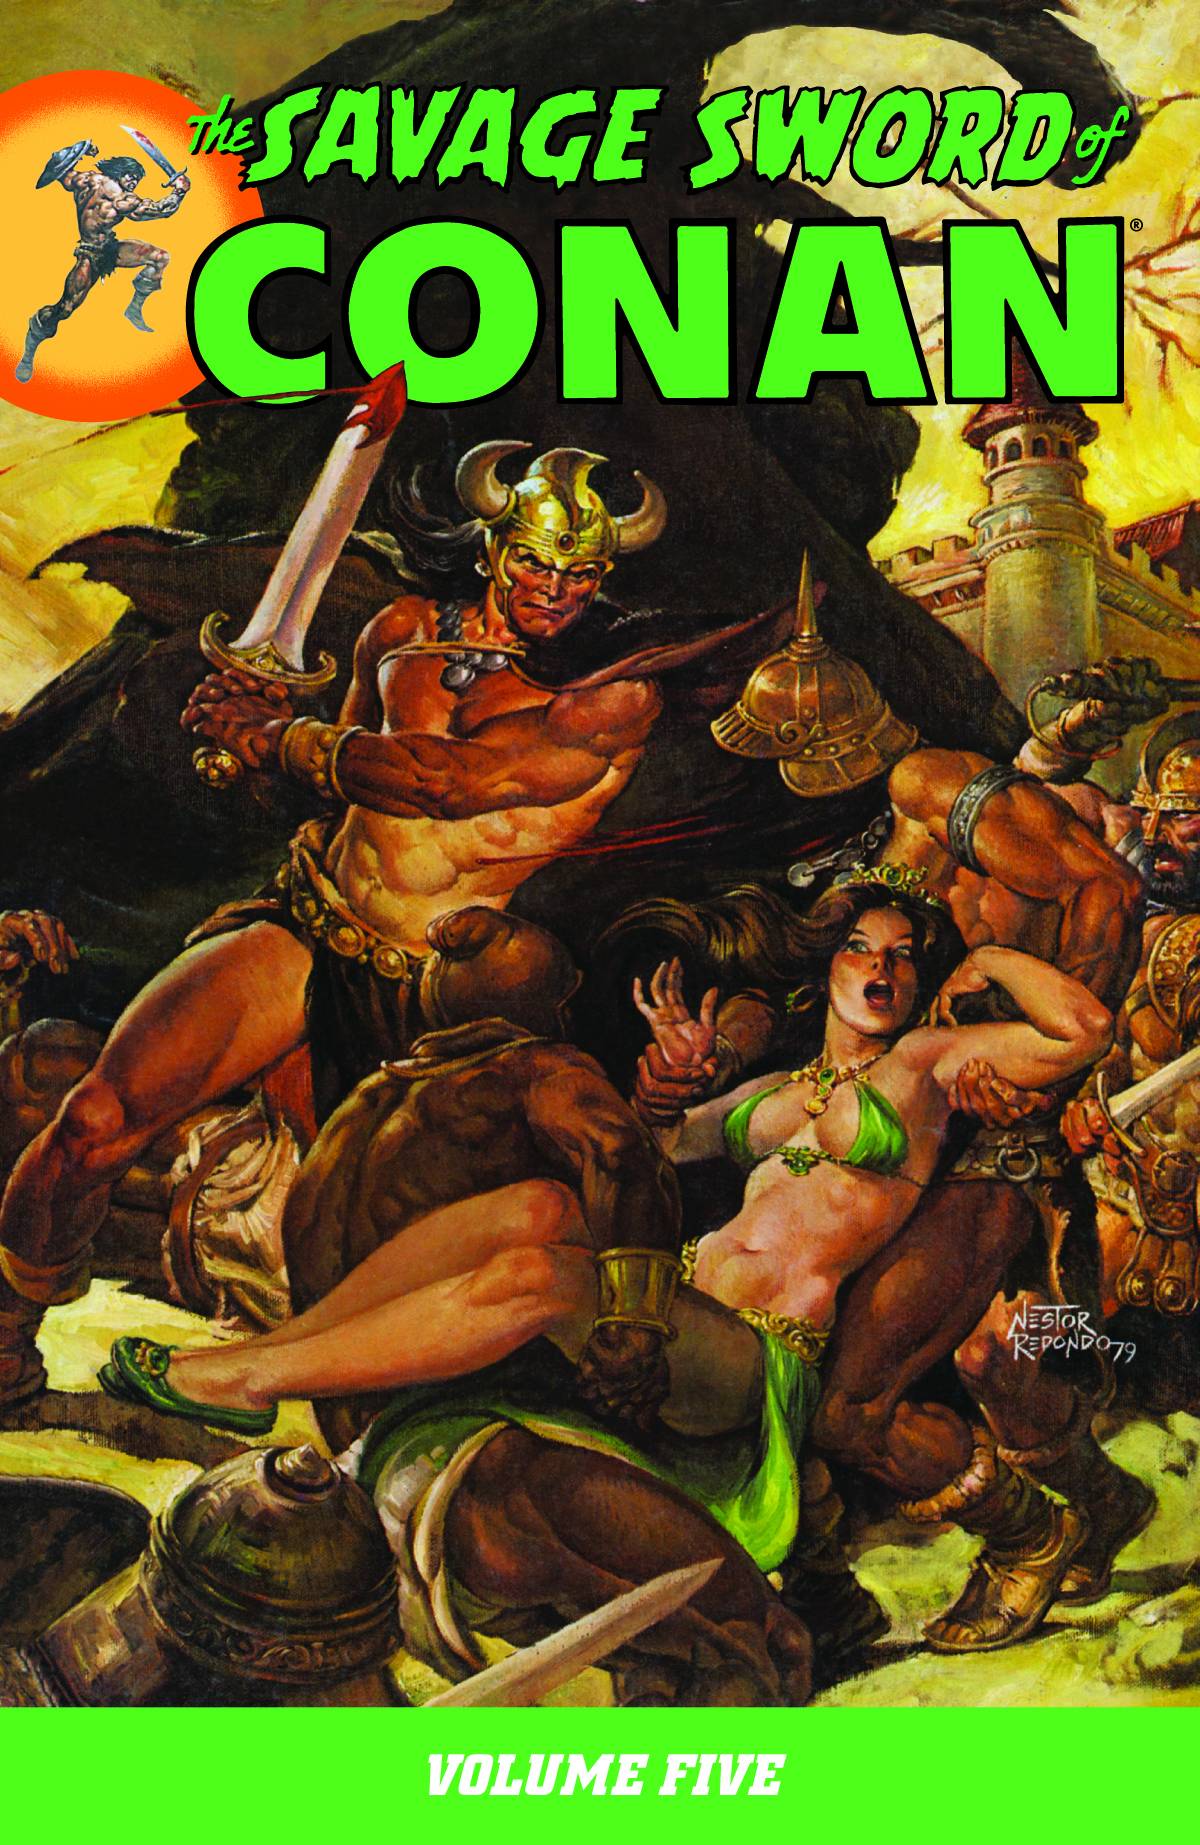 Savage Sword of Conan Graphic Novel Volume 5